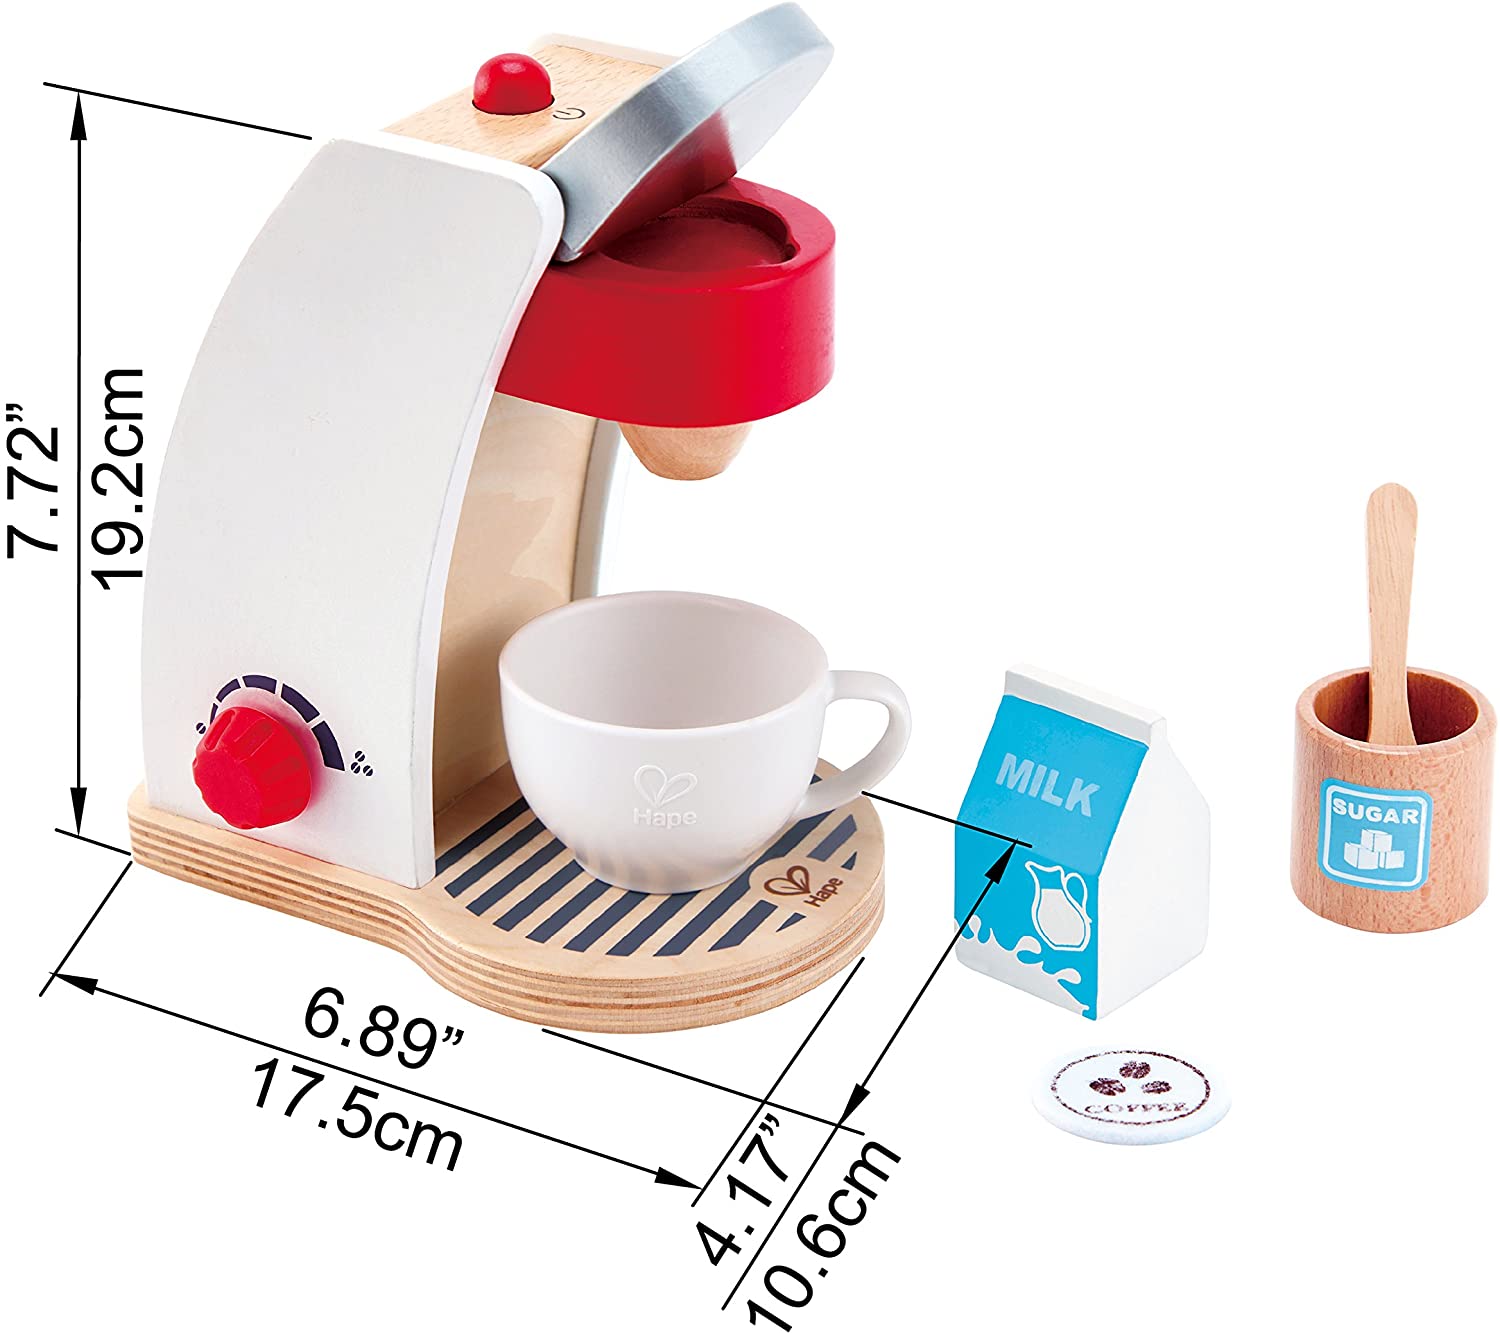 Hape My Coffee Machine Wooden Play Kitchen Set with Accessories (White)